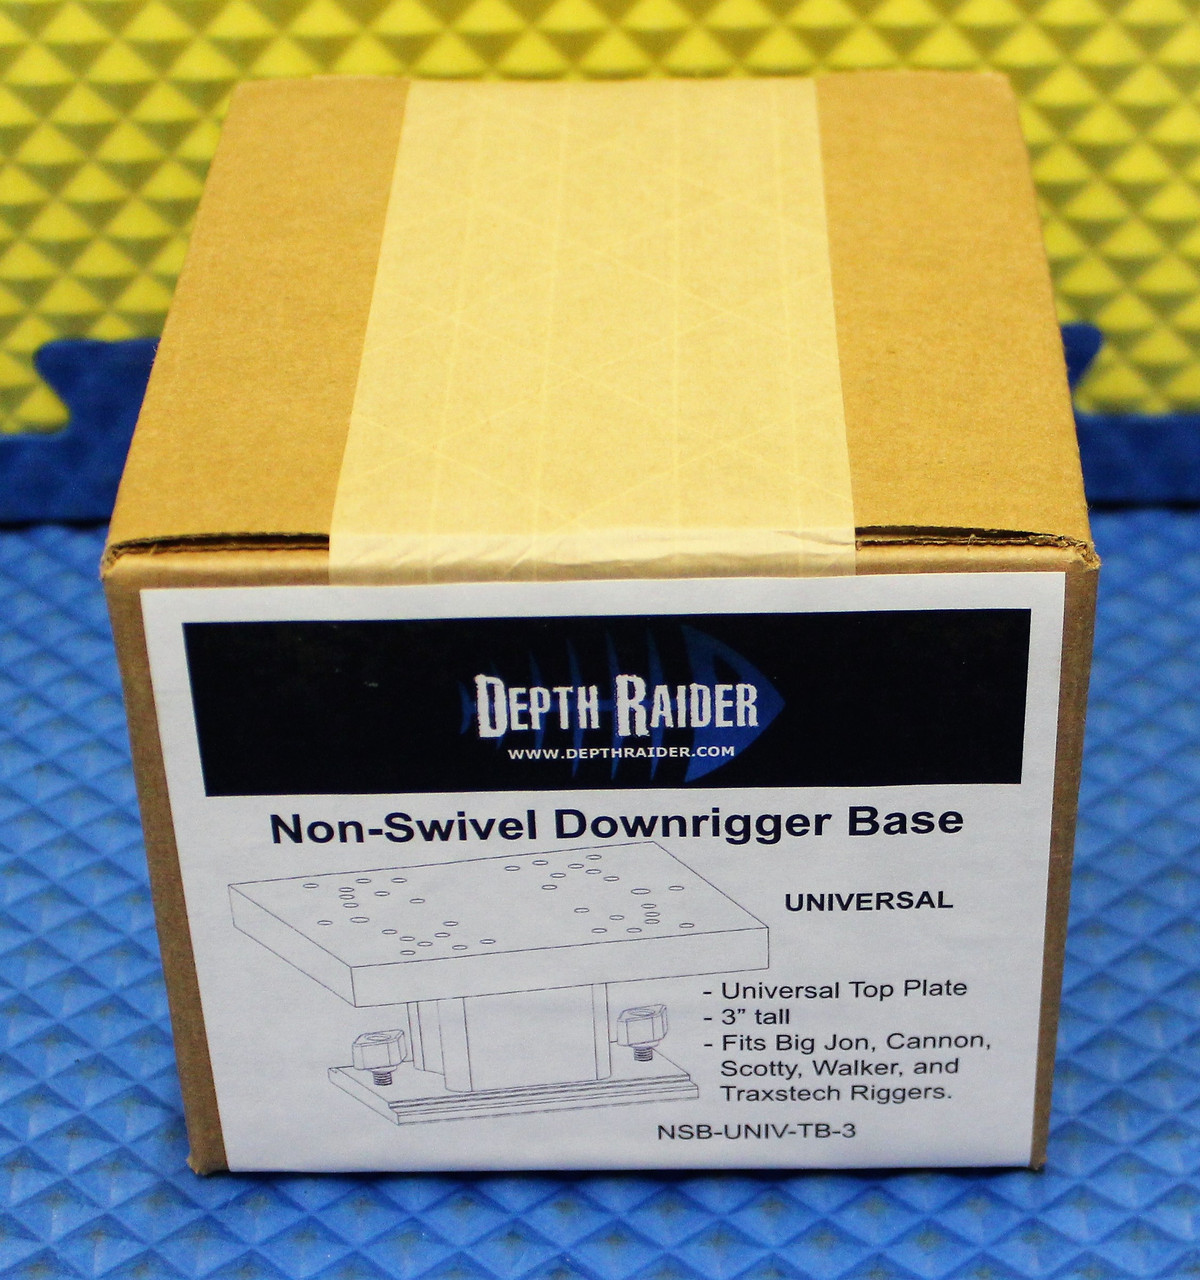 Depth Raider Marine Products By Kell Non-Swivel Downrigger Base 3" Height NSB-UNIV-TB-3